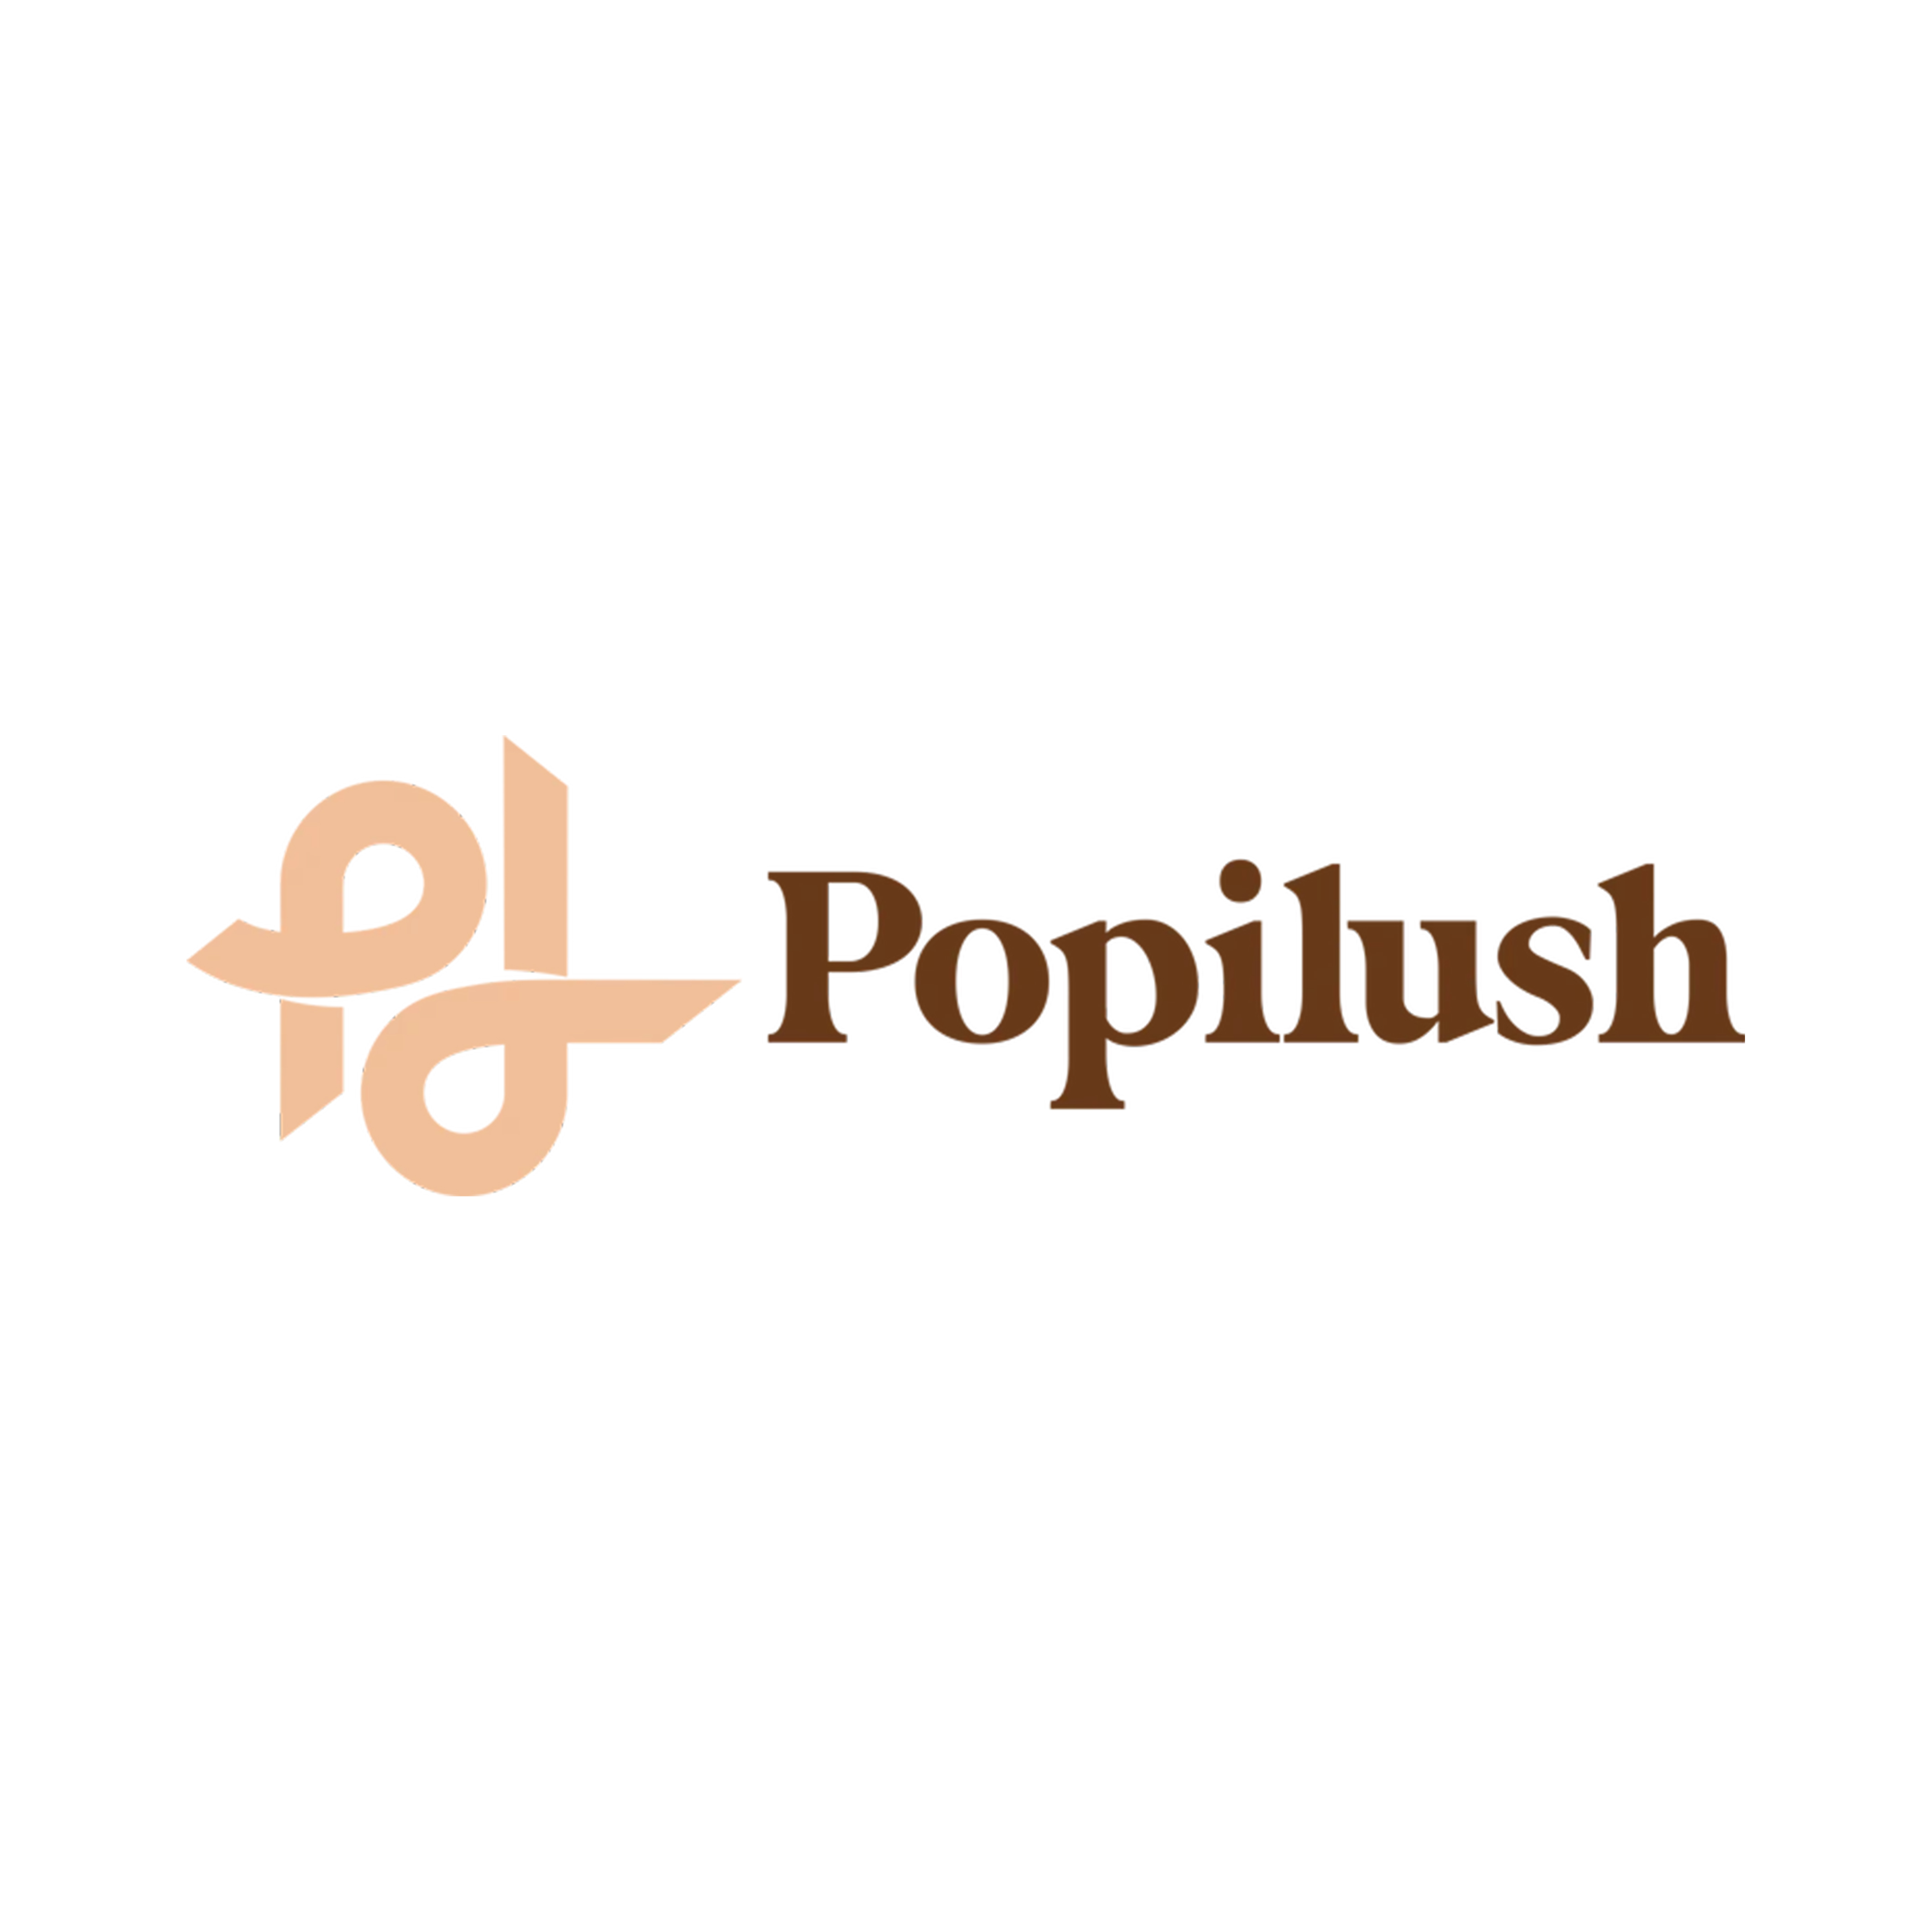 Popilush